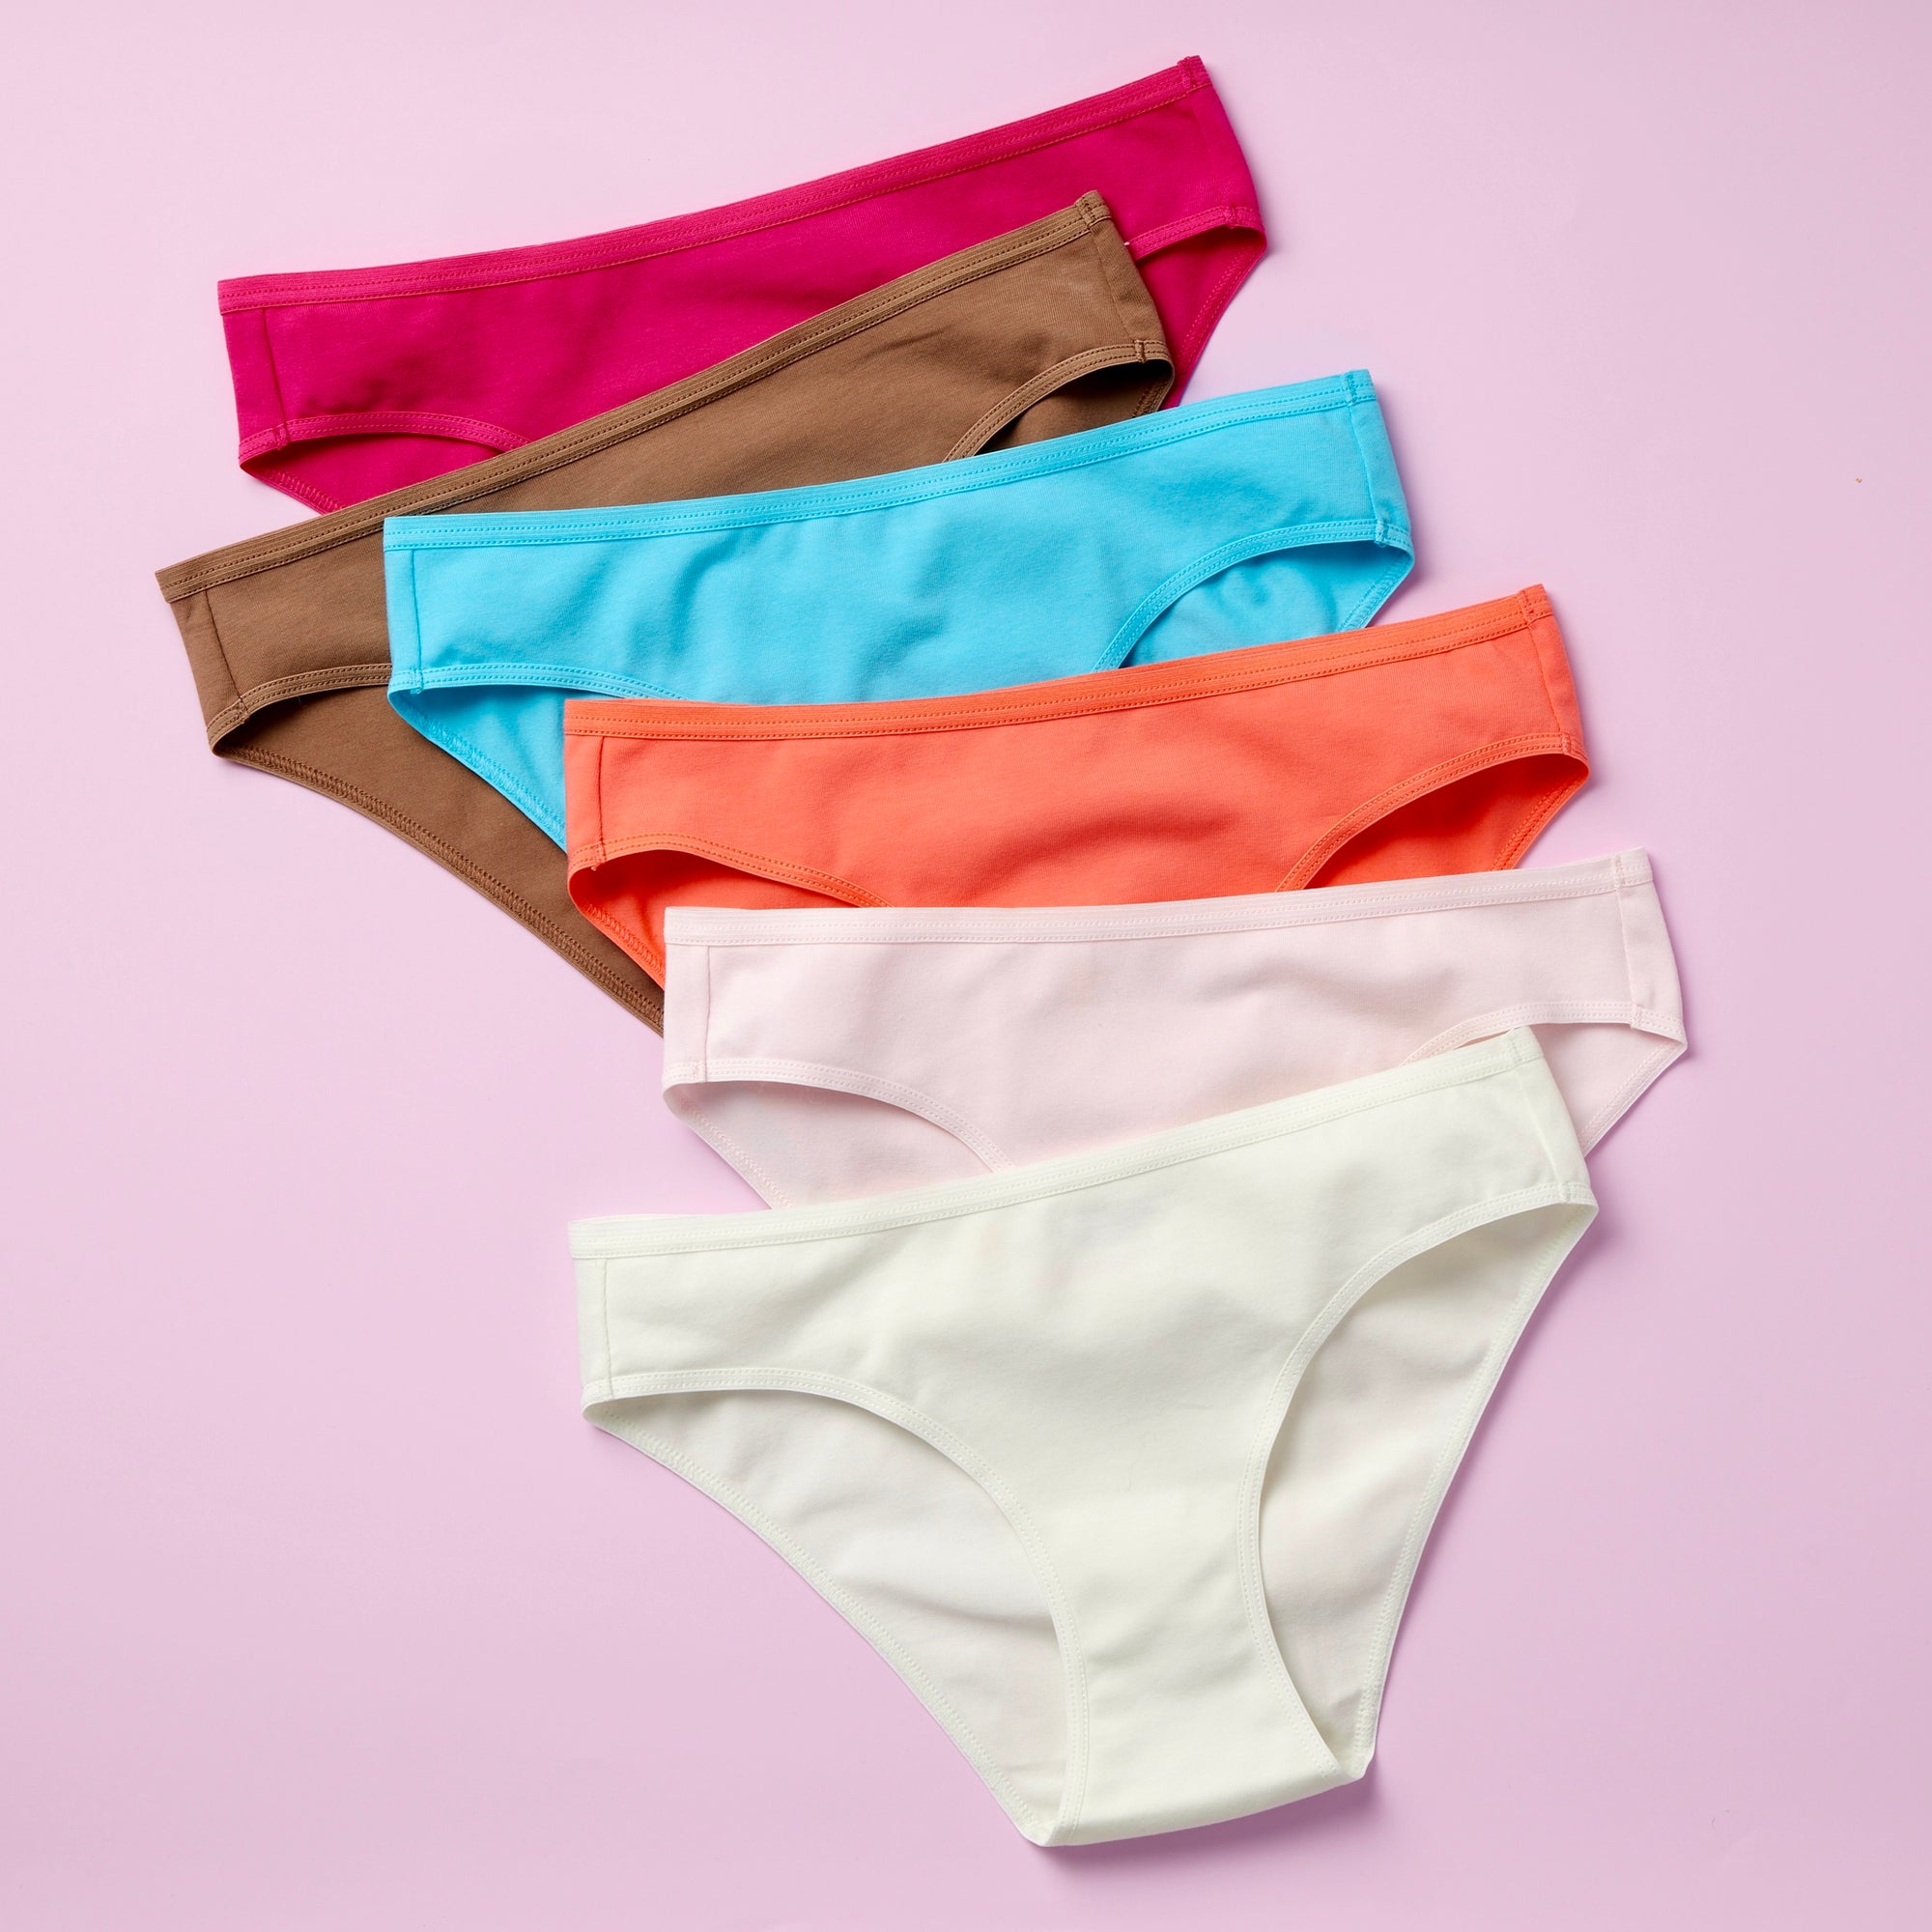 Beauty_yoyo 5 or 6 Pack Teen Girls Cotton Brief Underwear Lingerie